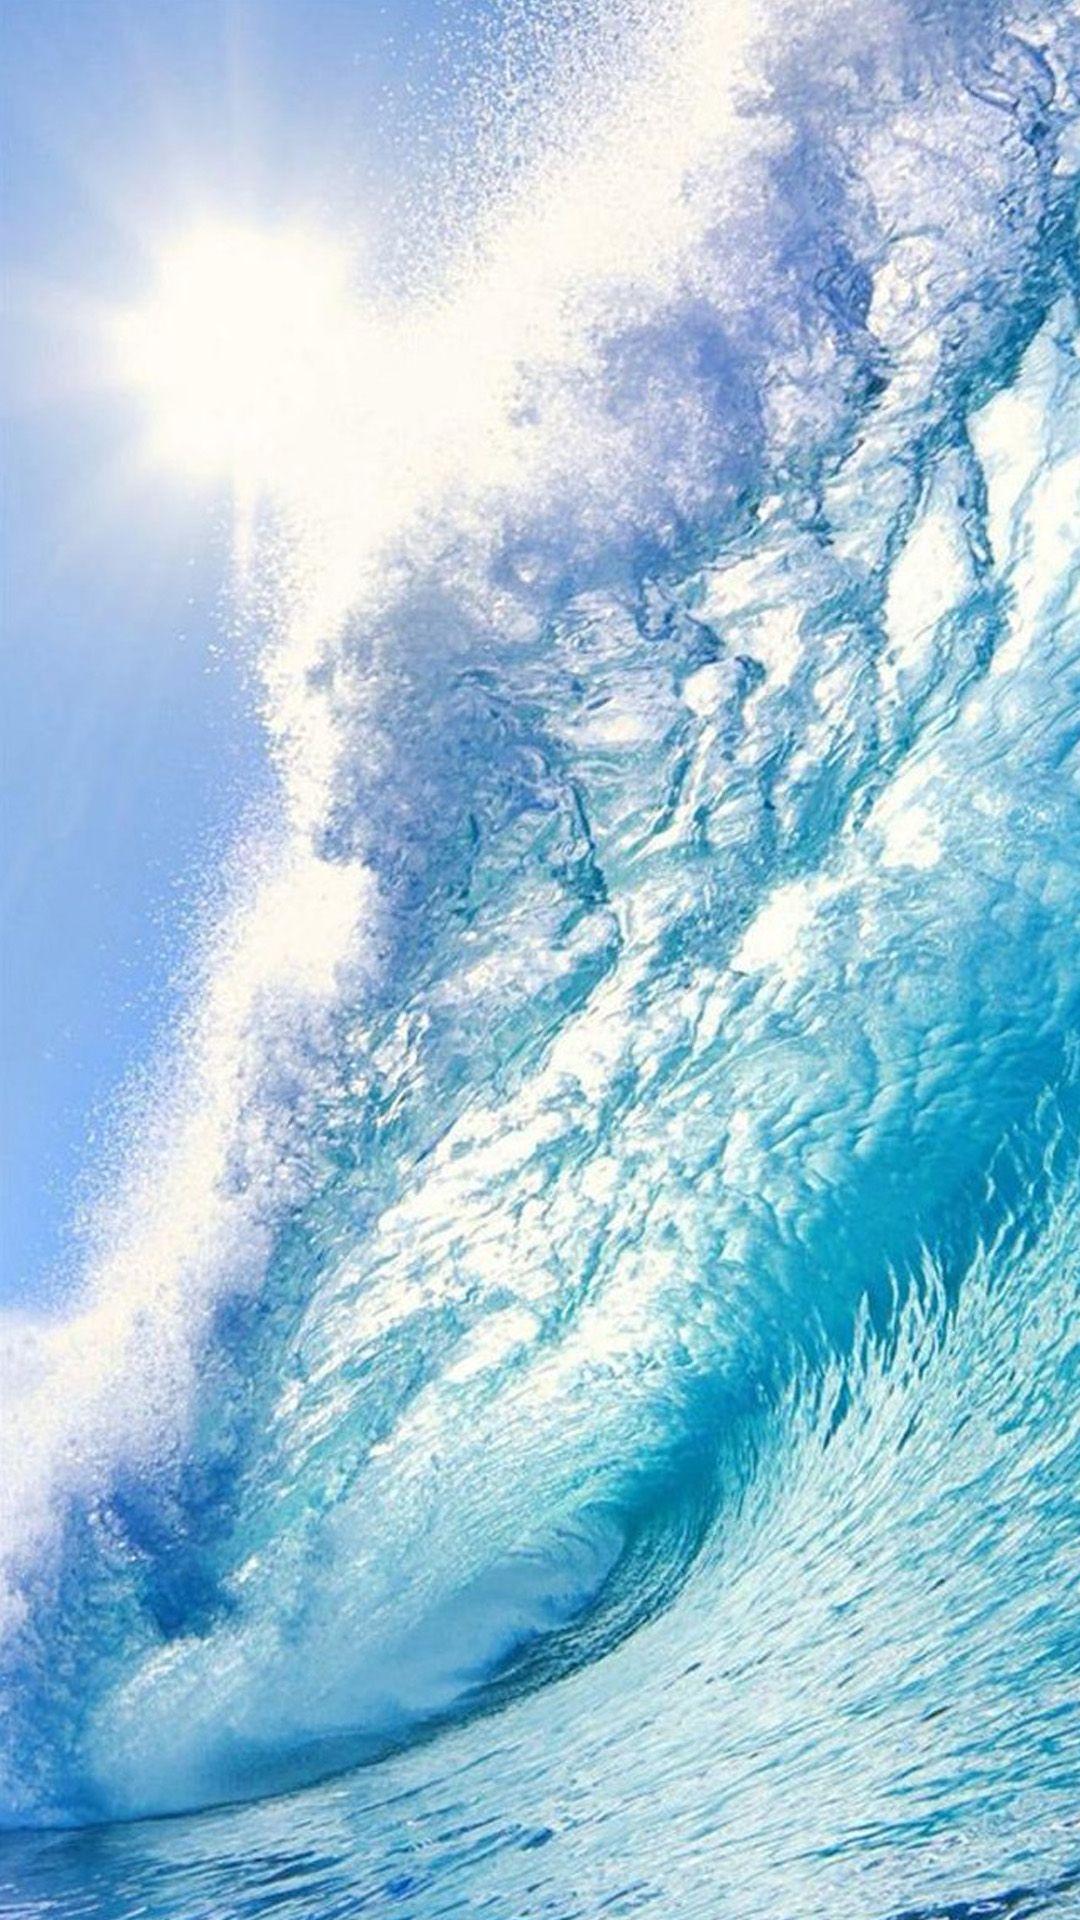 Big Wave Surfing IPhone Wallpaper Free Big Wave Surfing